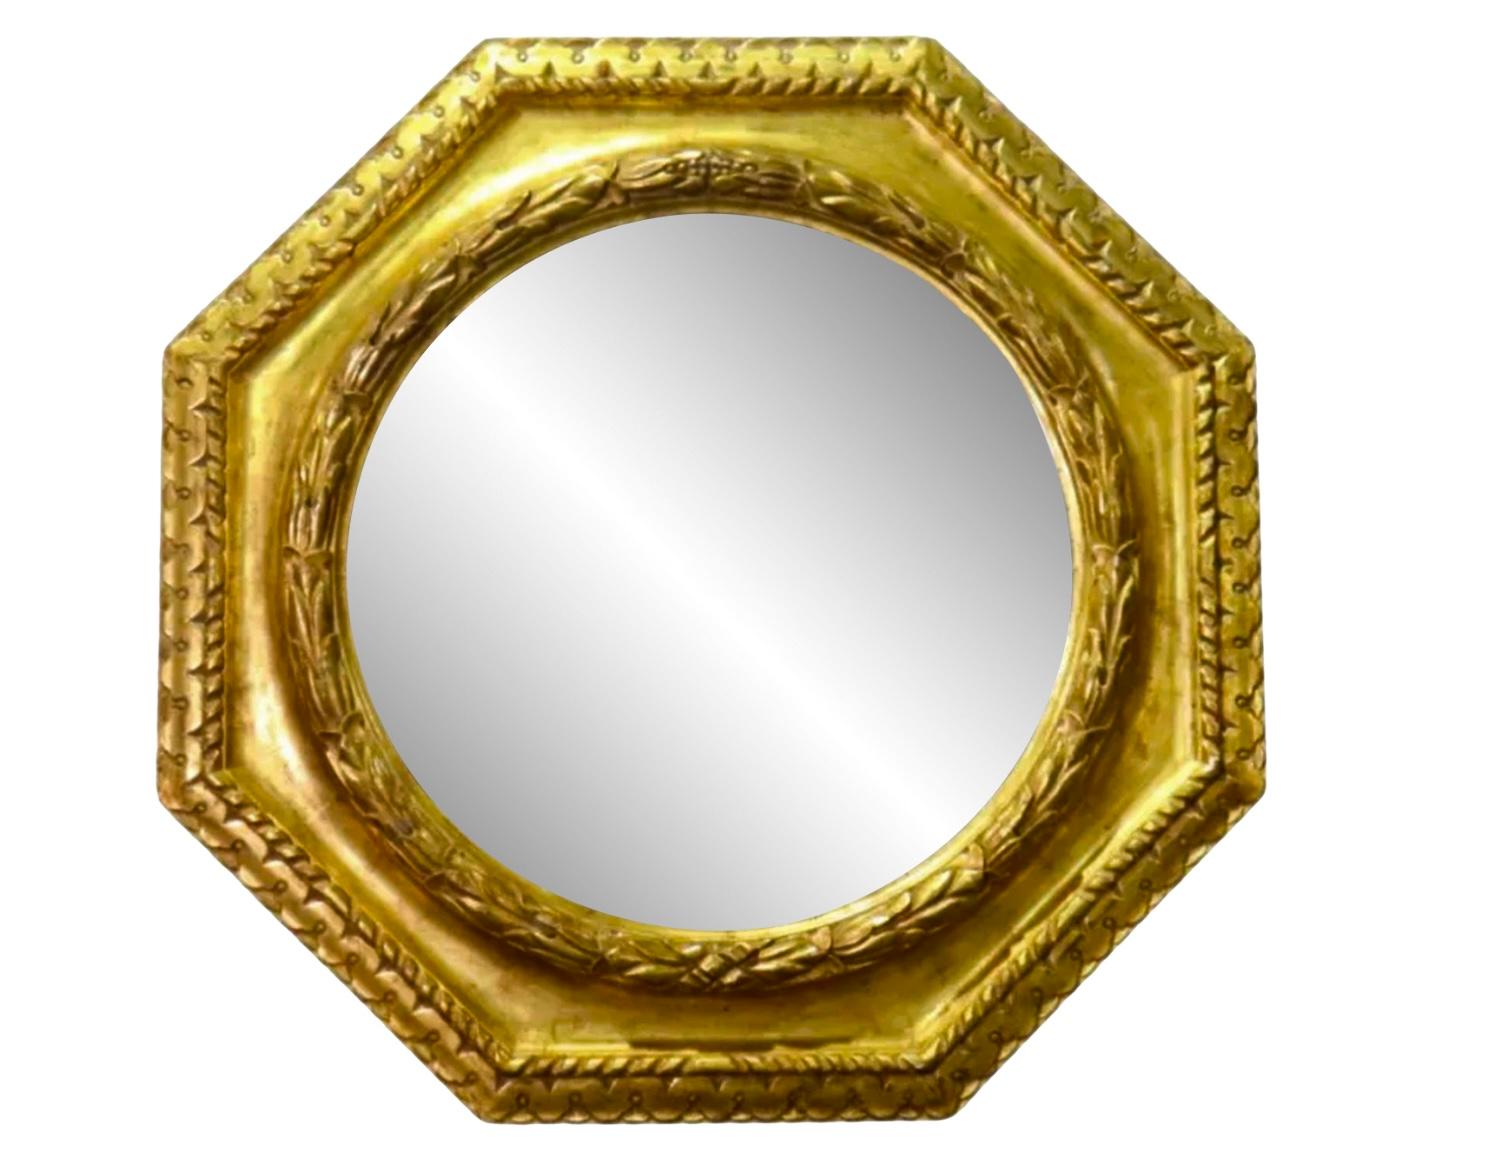 Paul Ferrante Octagonal Regency Giltwood Mirror With Bevel